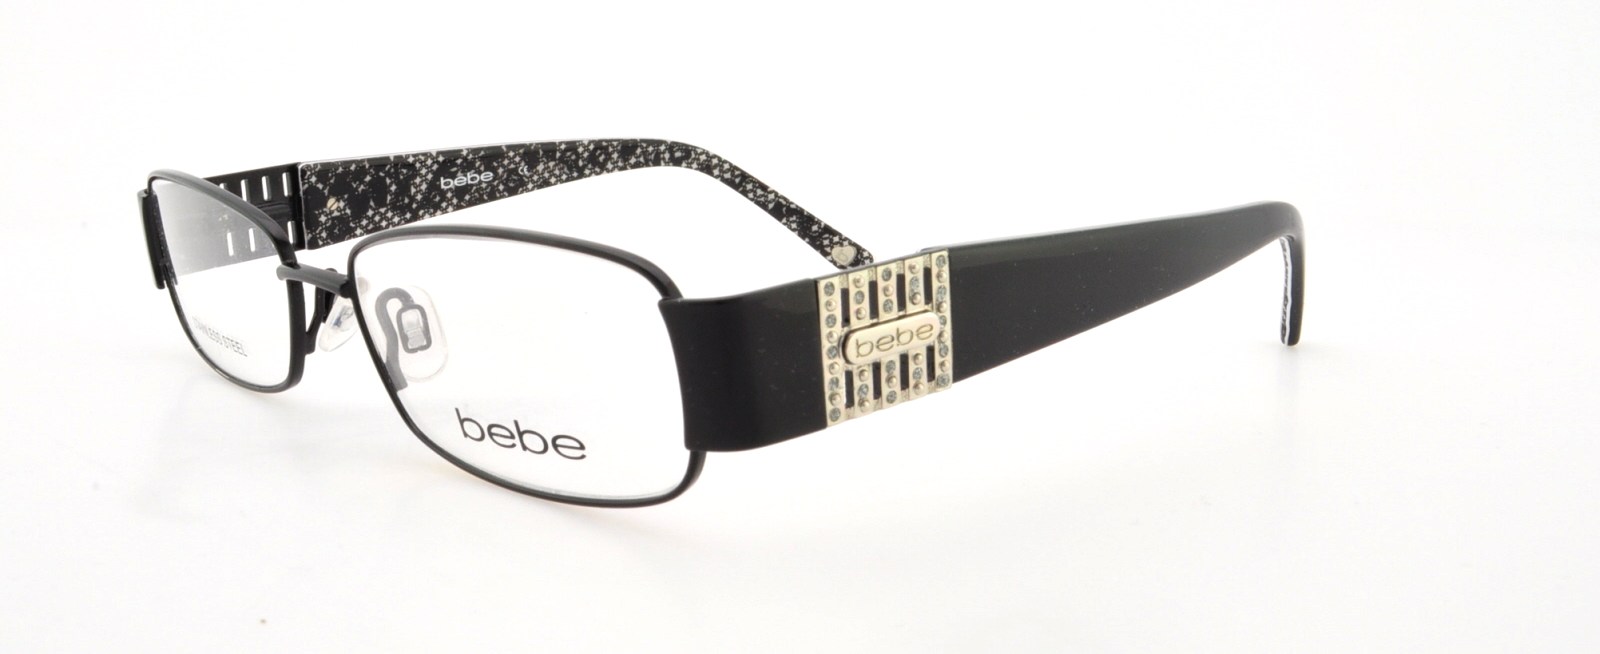 Picture of Bebe Eyeglasses BB5038 Desire